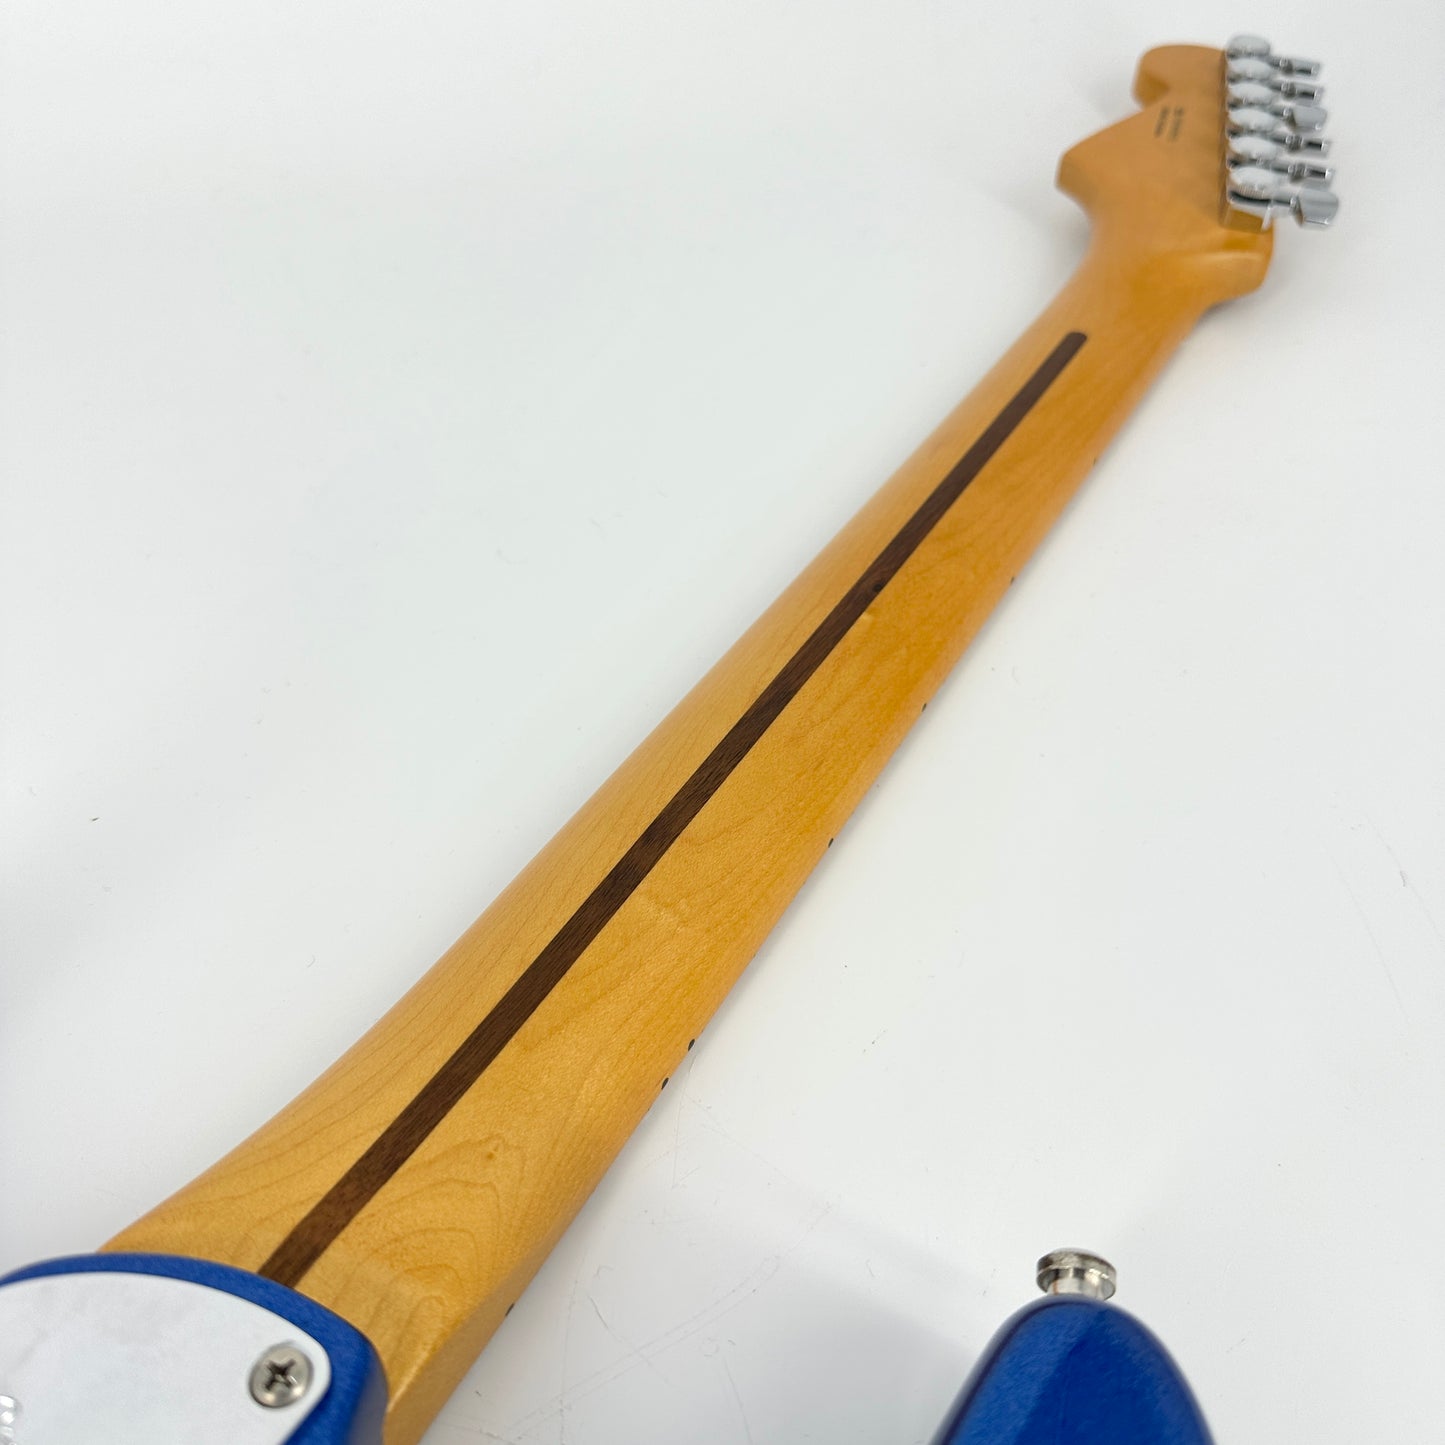 2019 Fender American Ultra Stratocaster – Cobra Blue